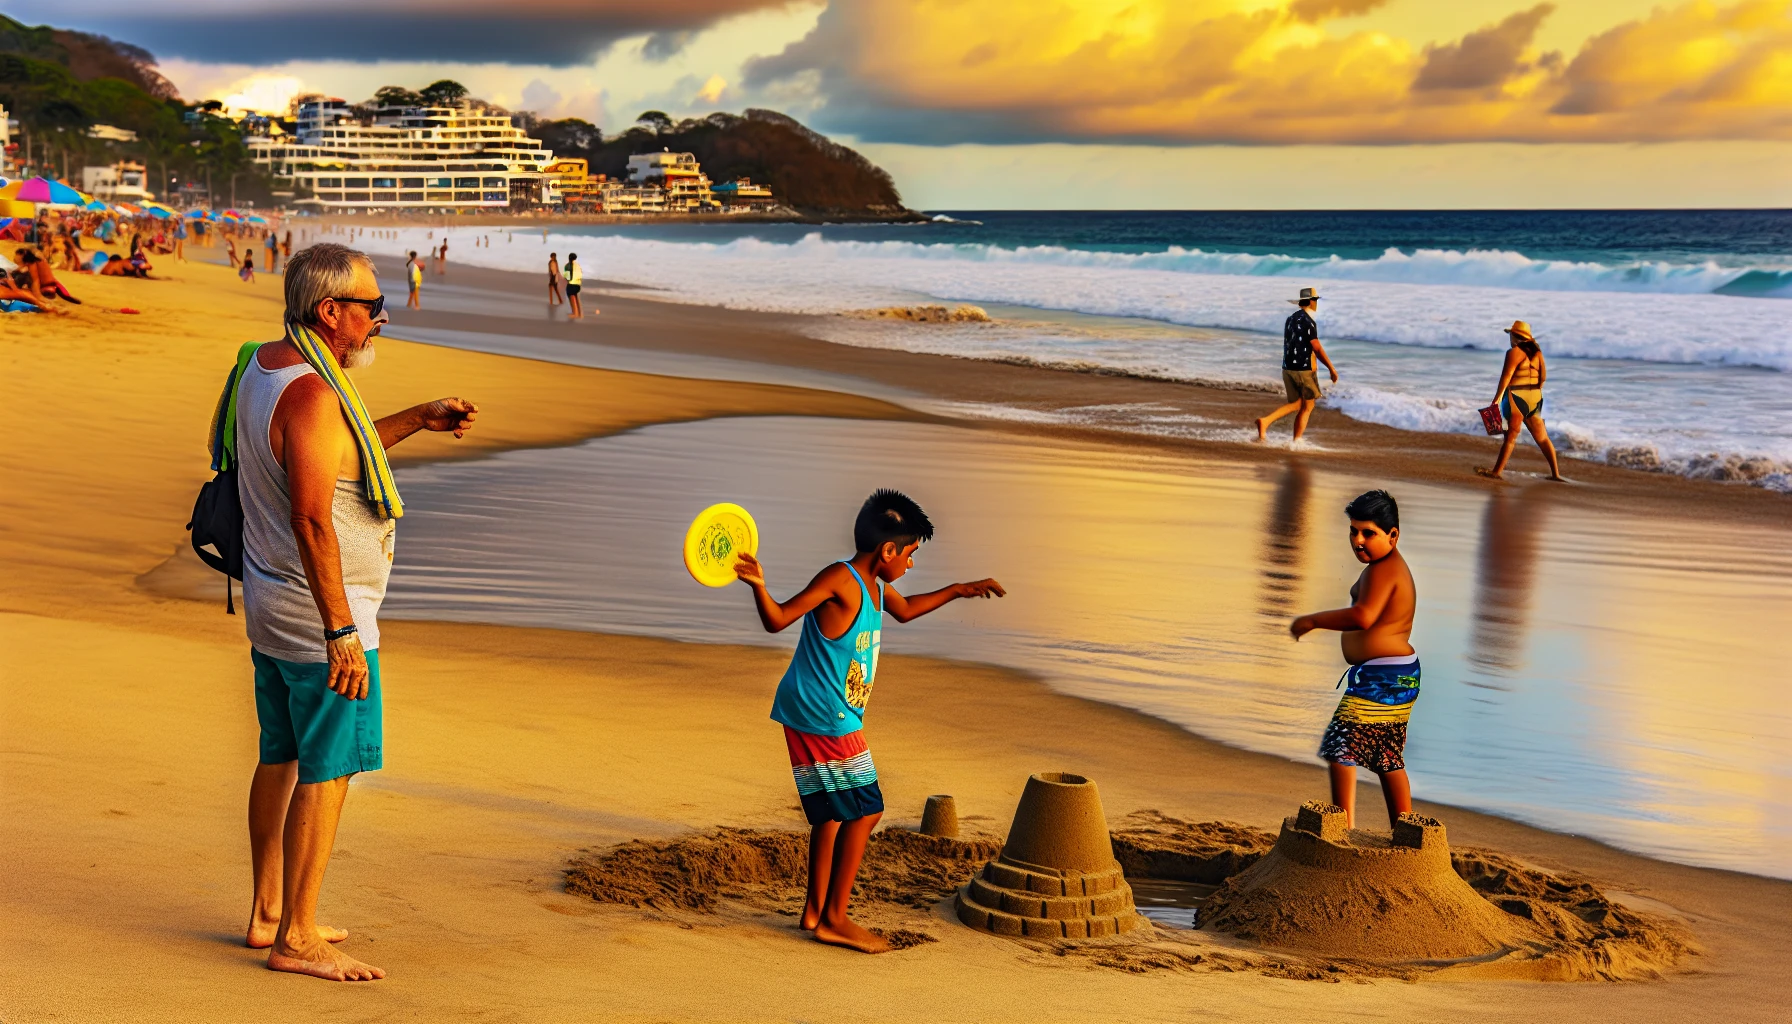 Family-friendly beach activities at Playa Prieta